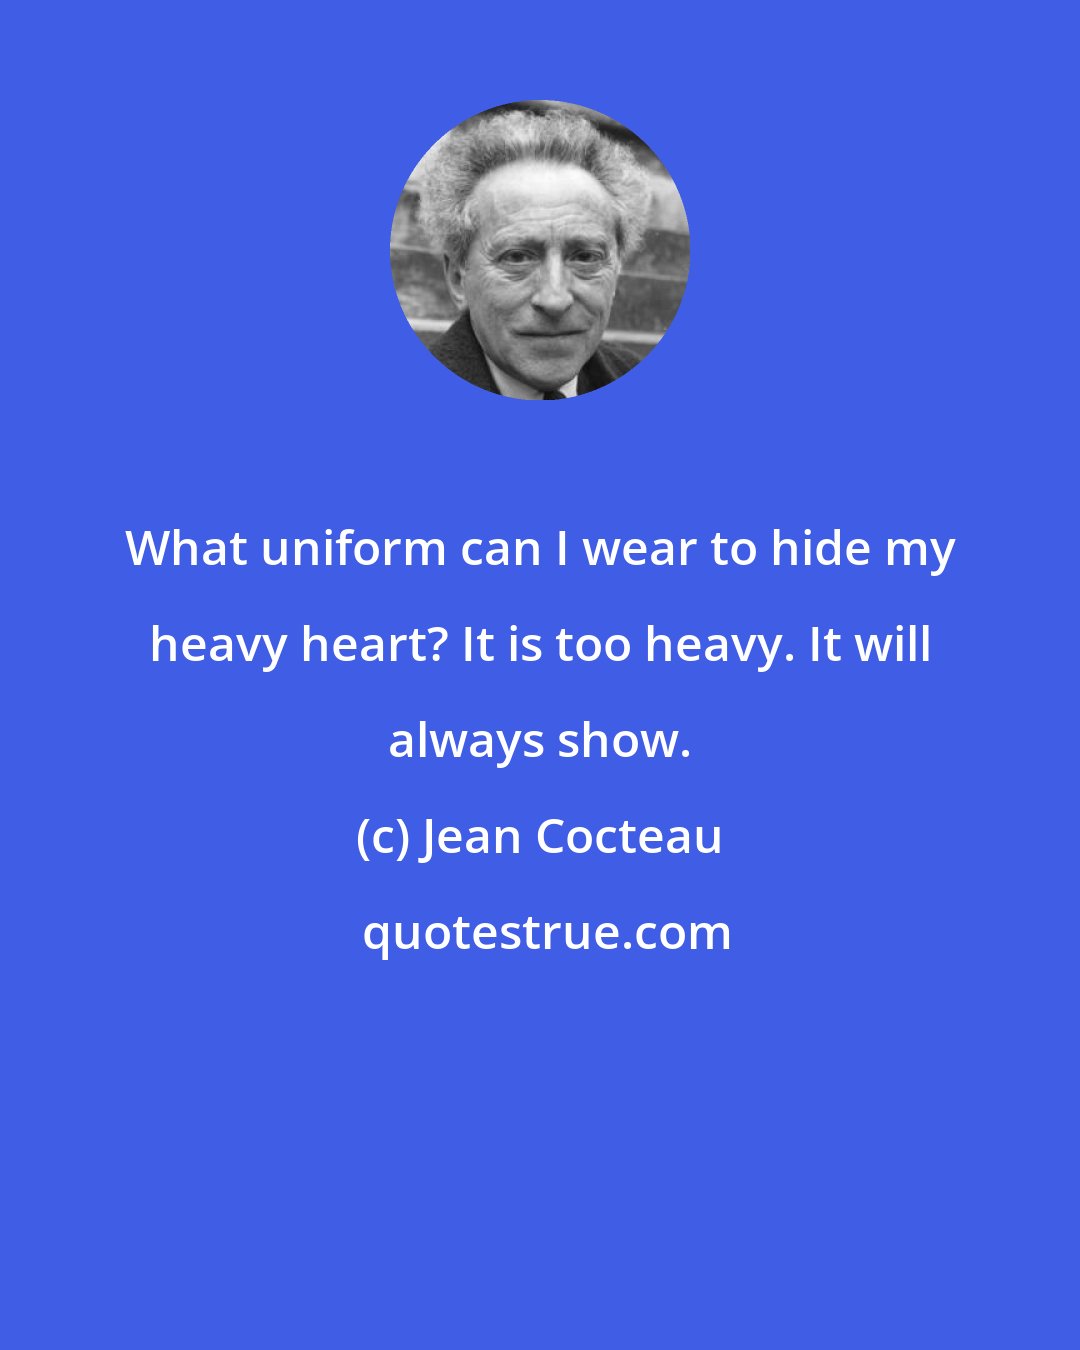 Jean Cocteau: What uniform can I wear to hide my heavy heart? It is too heavy. It will always show.